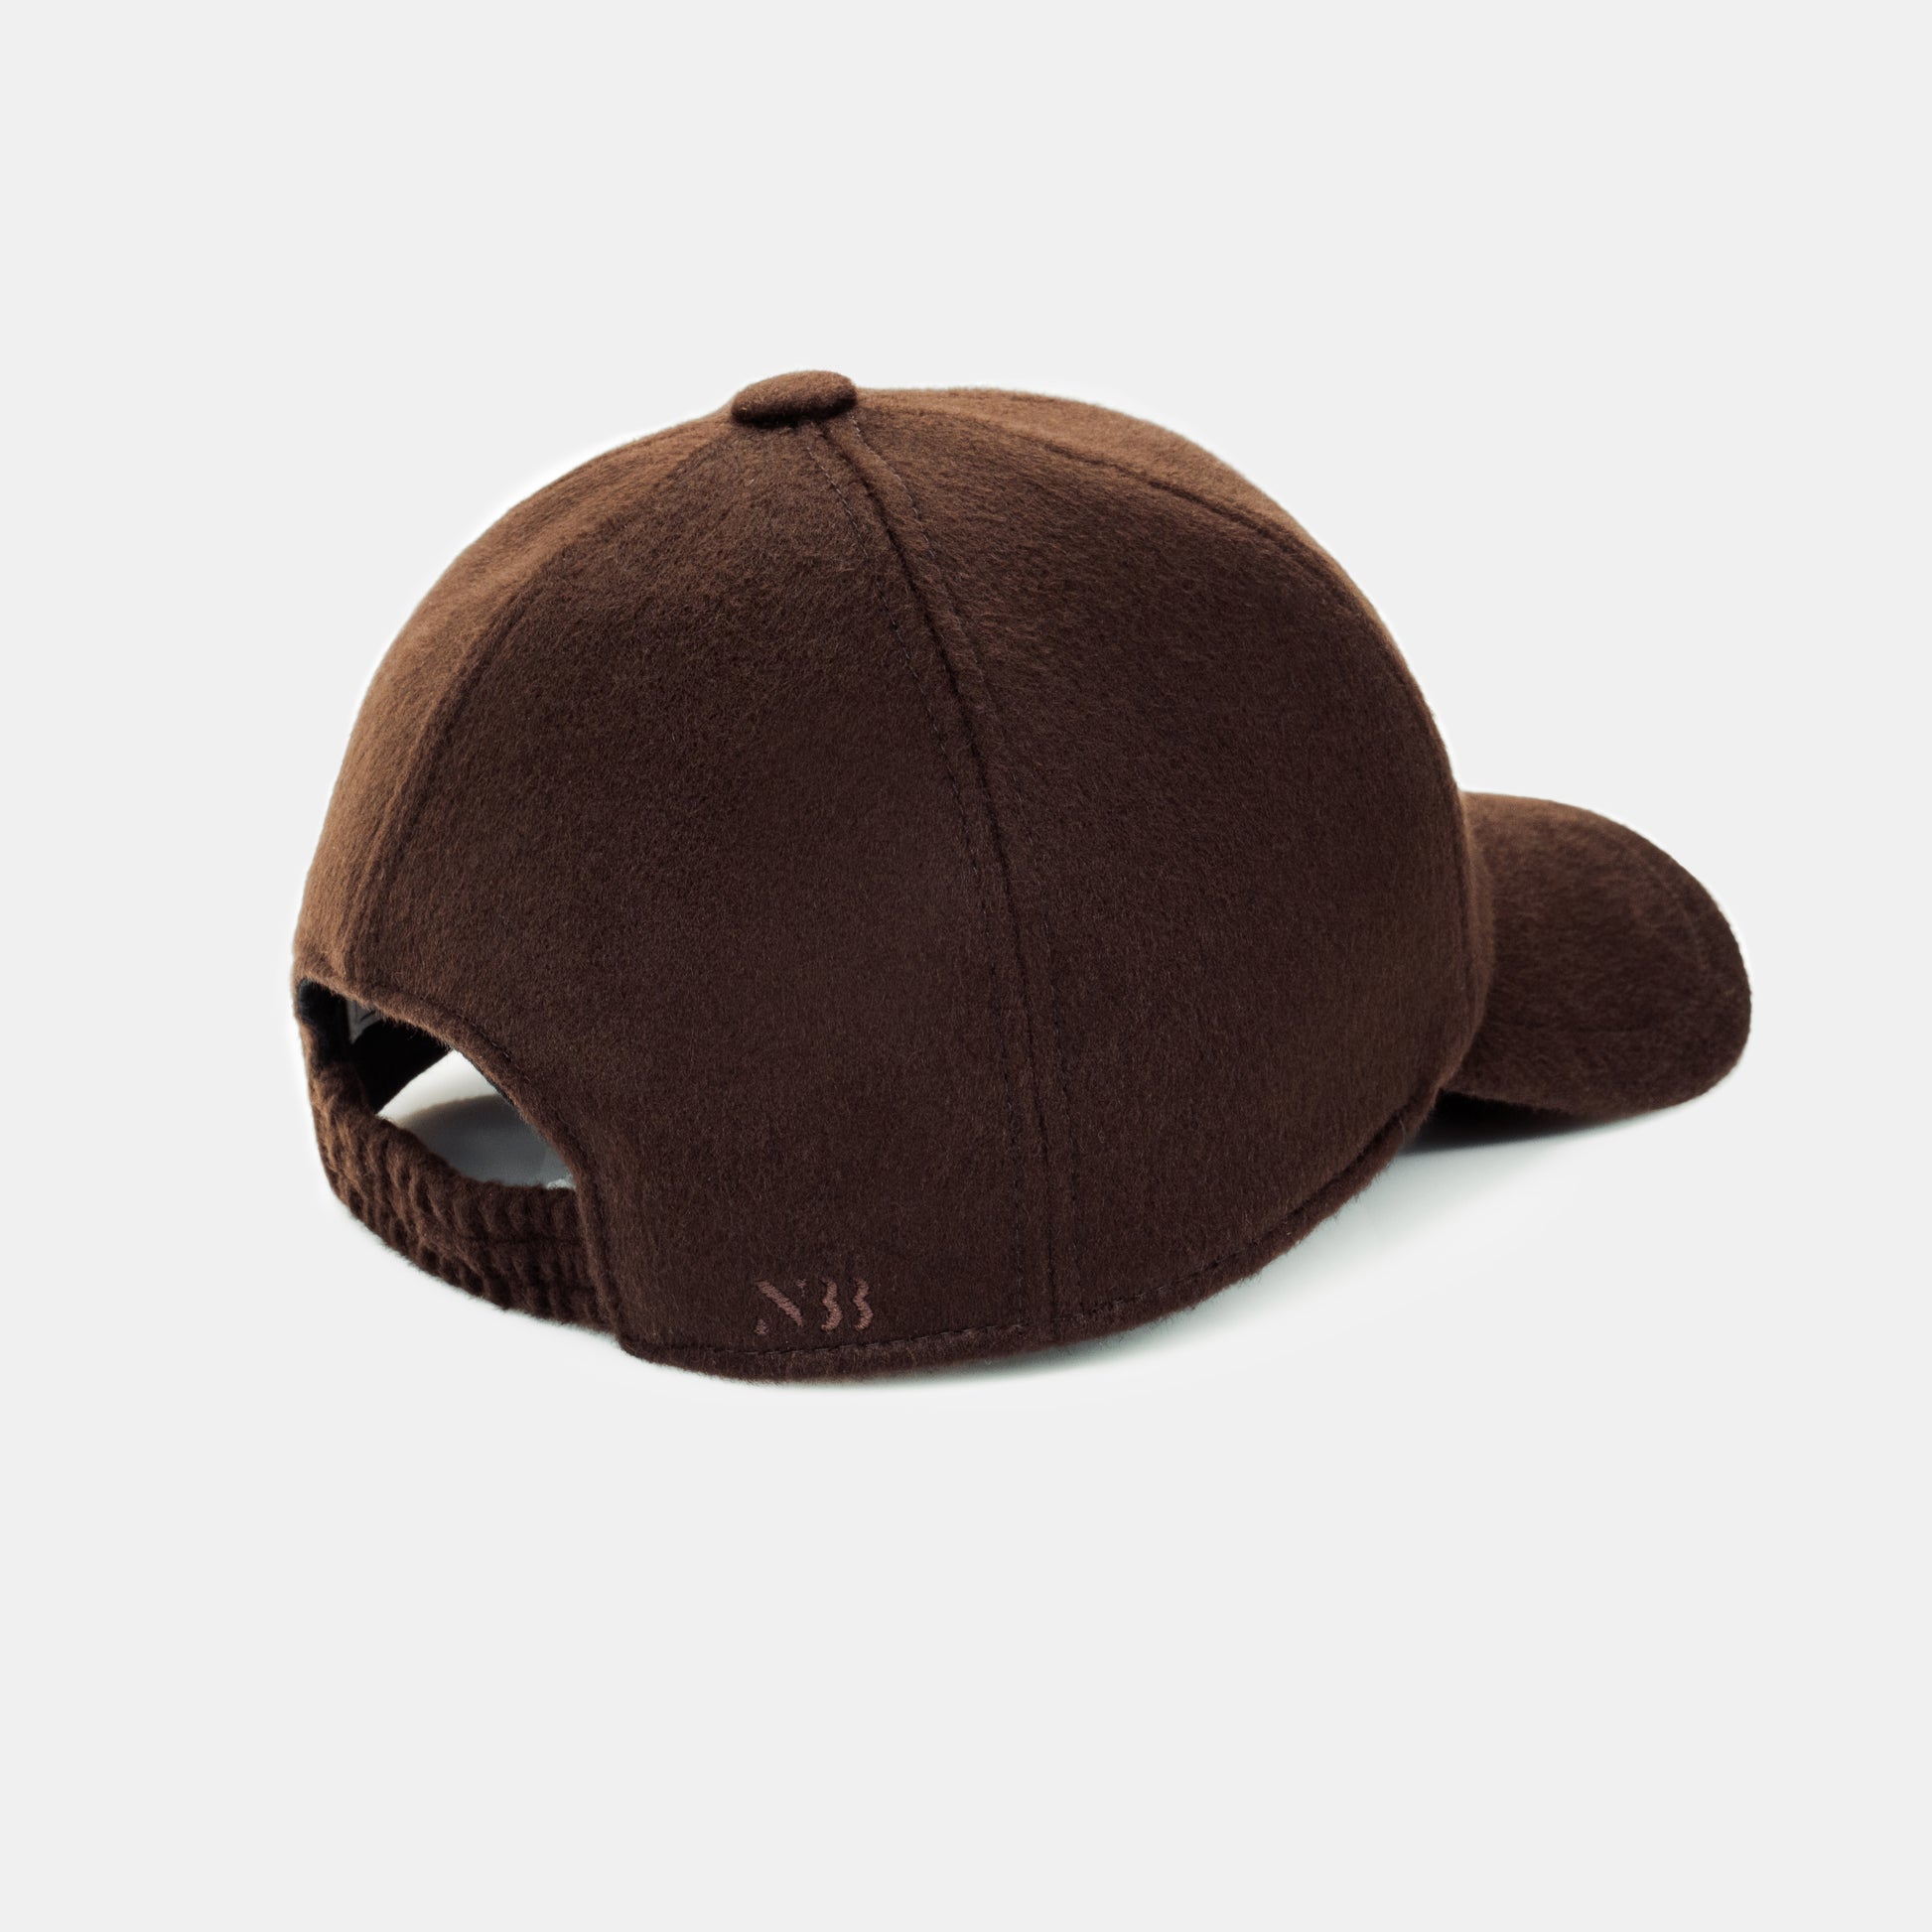 N33 BASEBALL CAP 100% cashmere cap made in Italy luxury baseball cap dark brown, unisex, high quality handmade cap artisan-made hat 